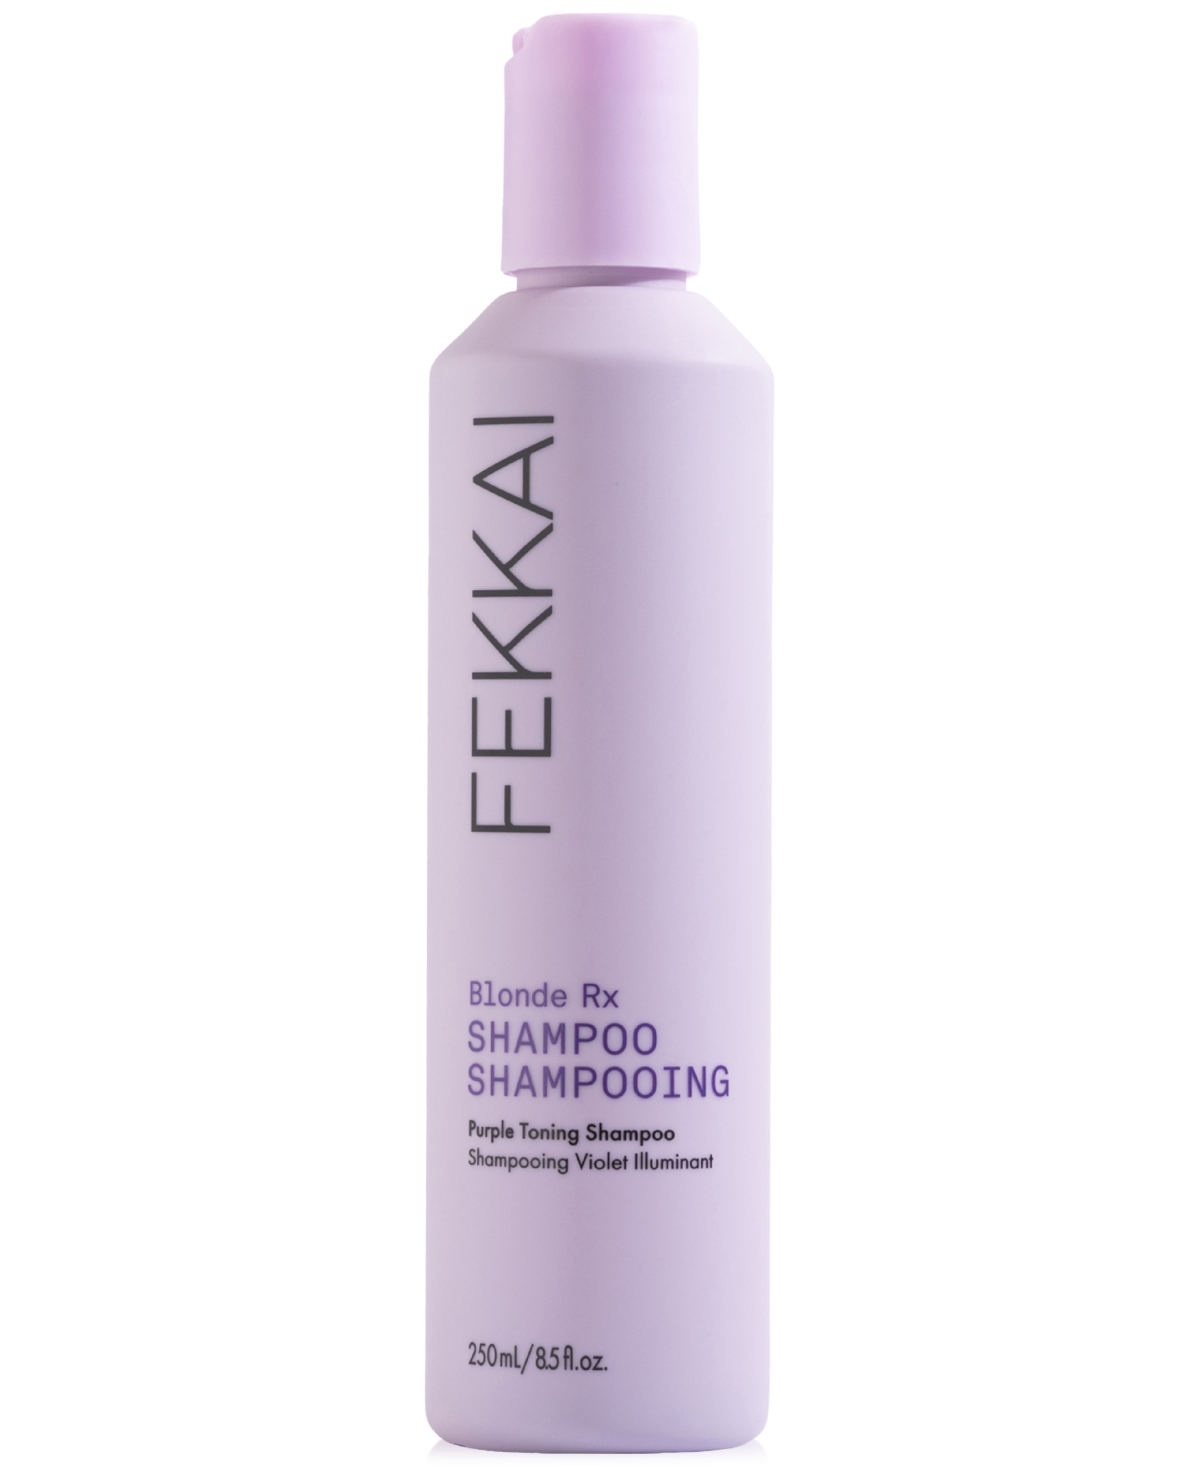 Blonde Rx Purple Toning Shampoo, 8.5 oz.